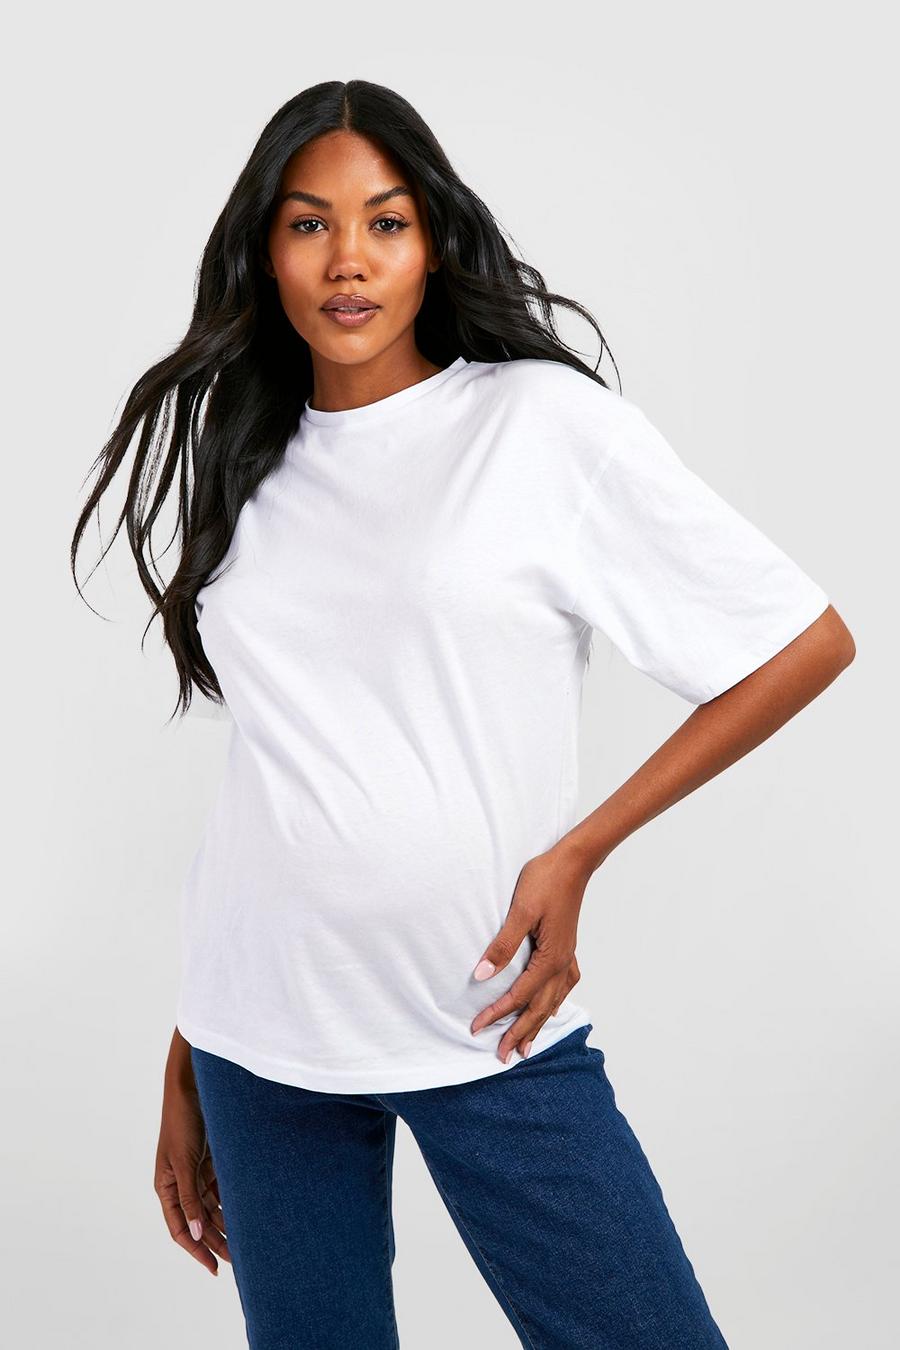 White Maternity Shirt Boho Shirts for Women,Womens Tie Dye Casual Print T  Shirts Short Sleeve Tops Round Neck Loose Fit Oversized Shirts Teens Girls  Trendy Stuff 